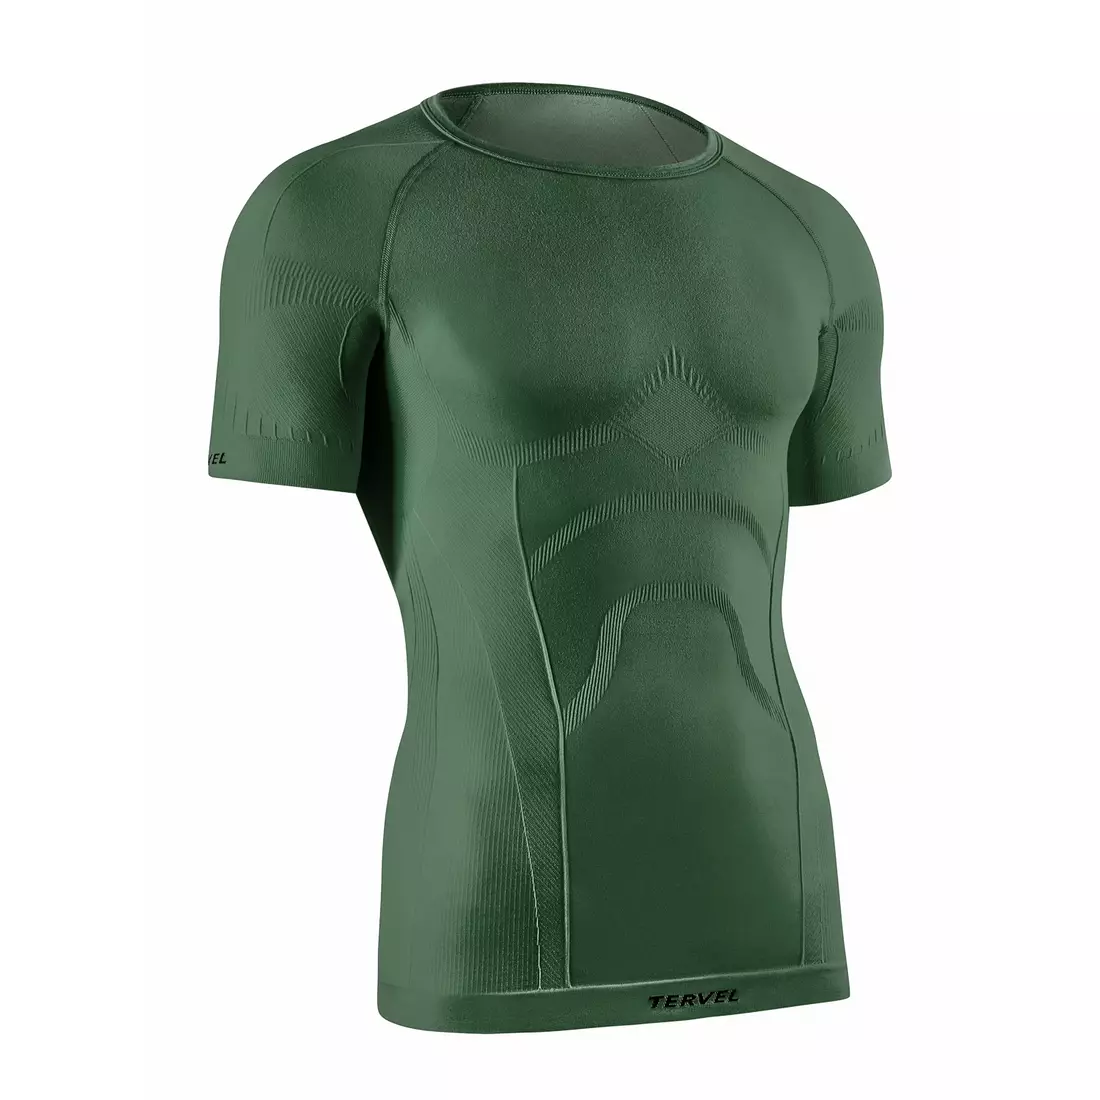 TERVEL COMFORTLINE 1102 - men's thermal T-shirt, short sleeve, color: Military (green)